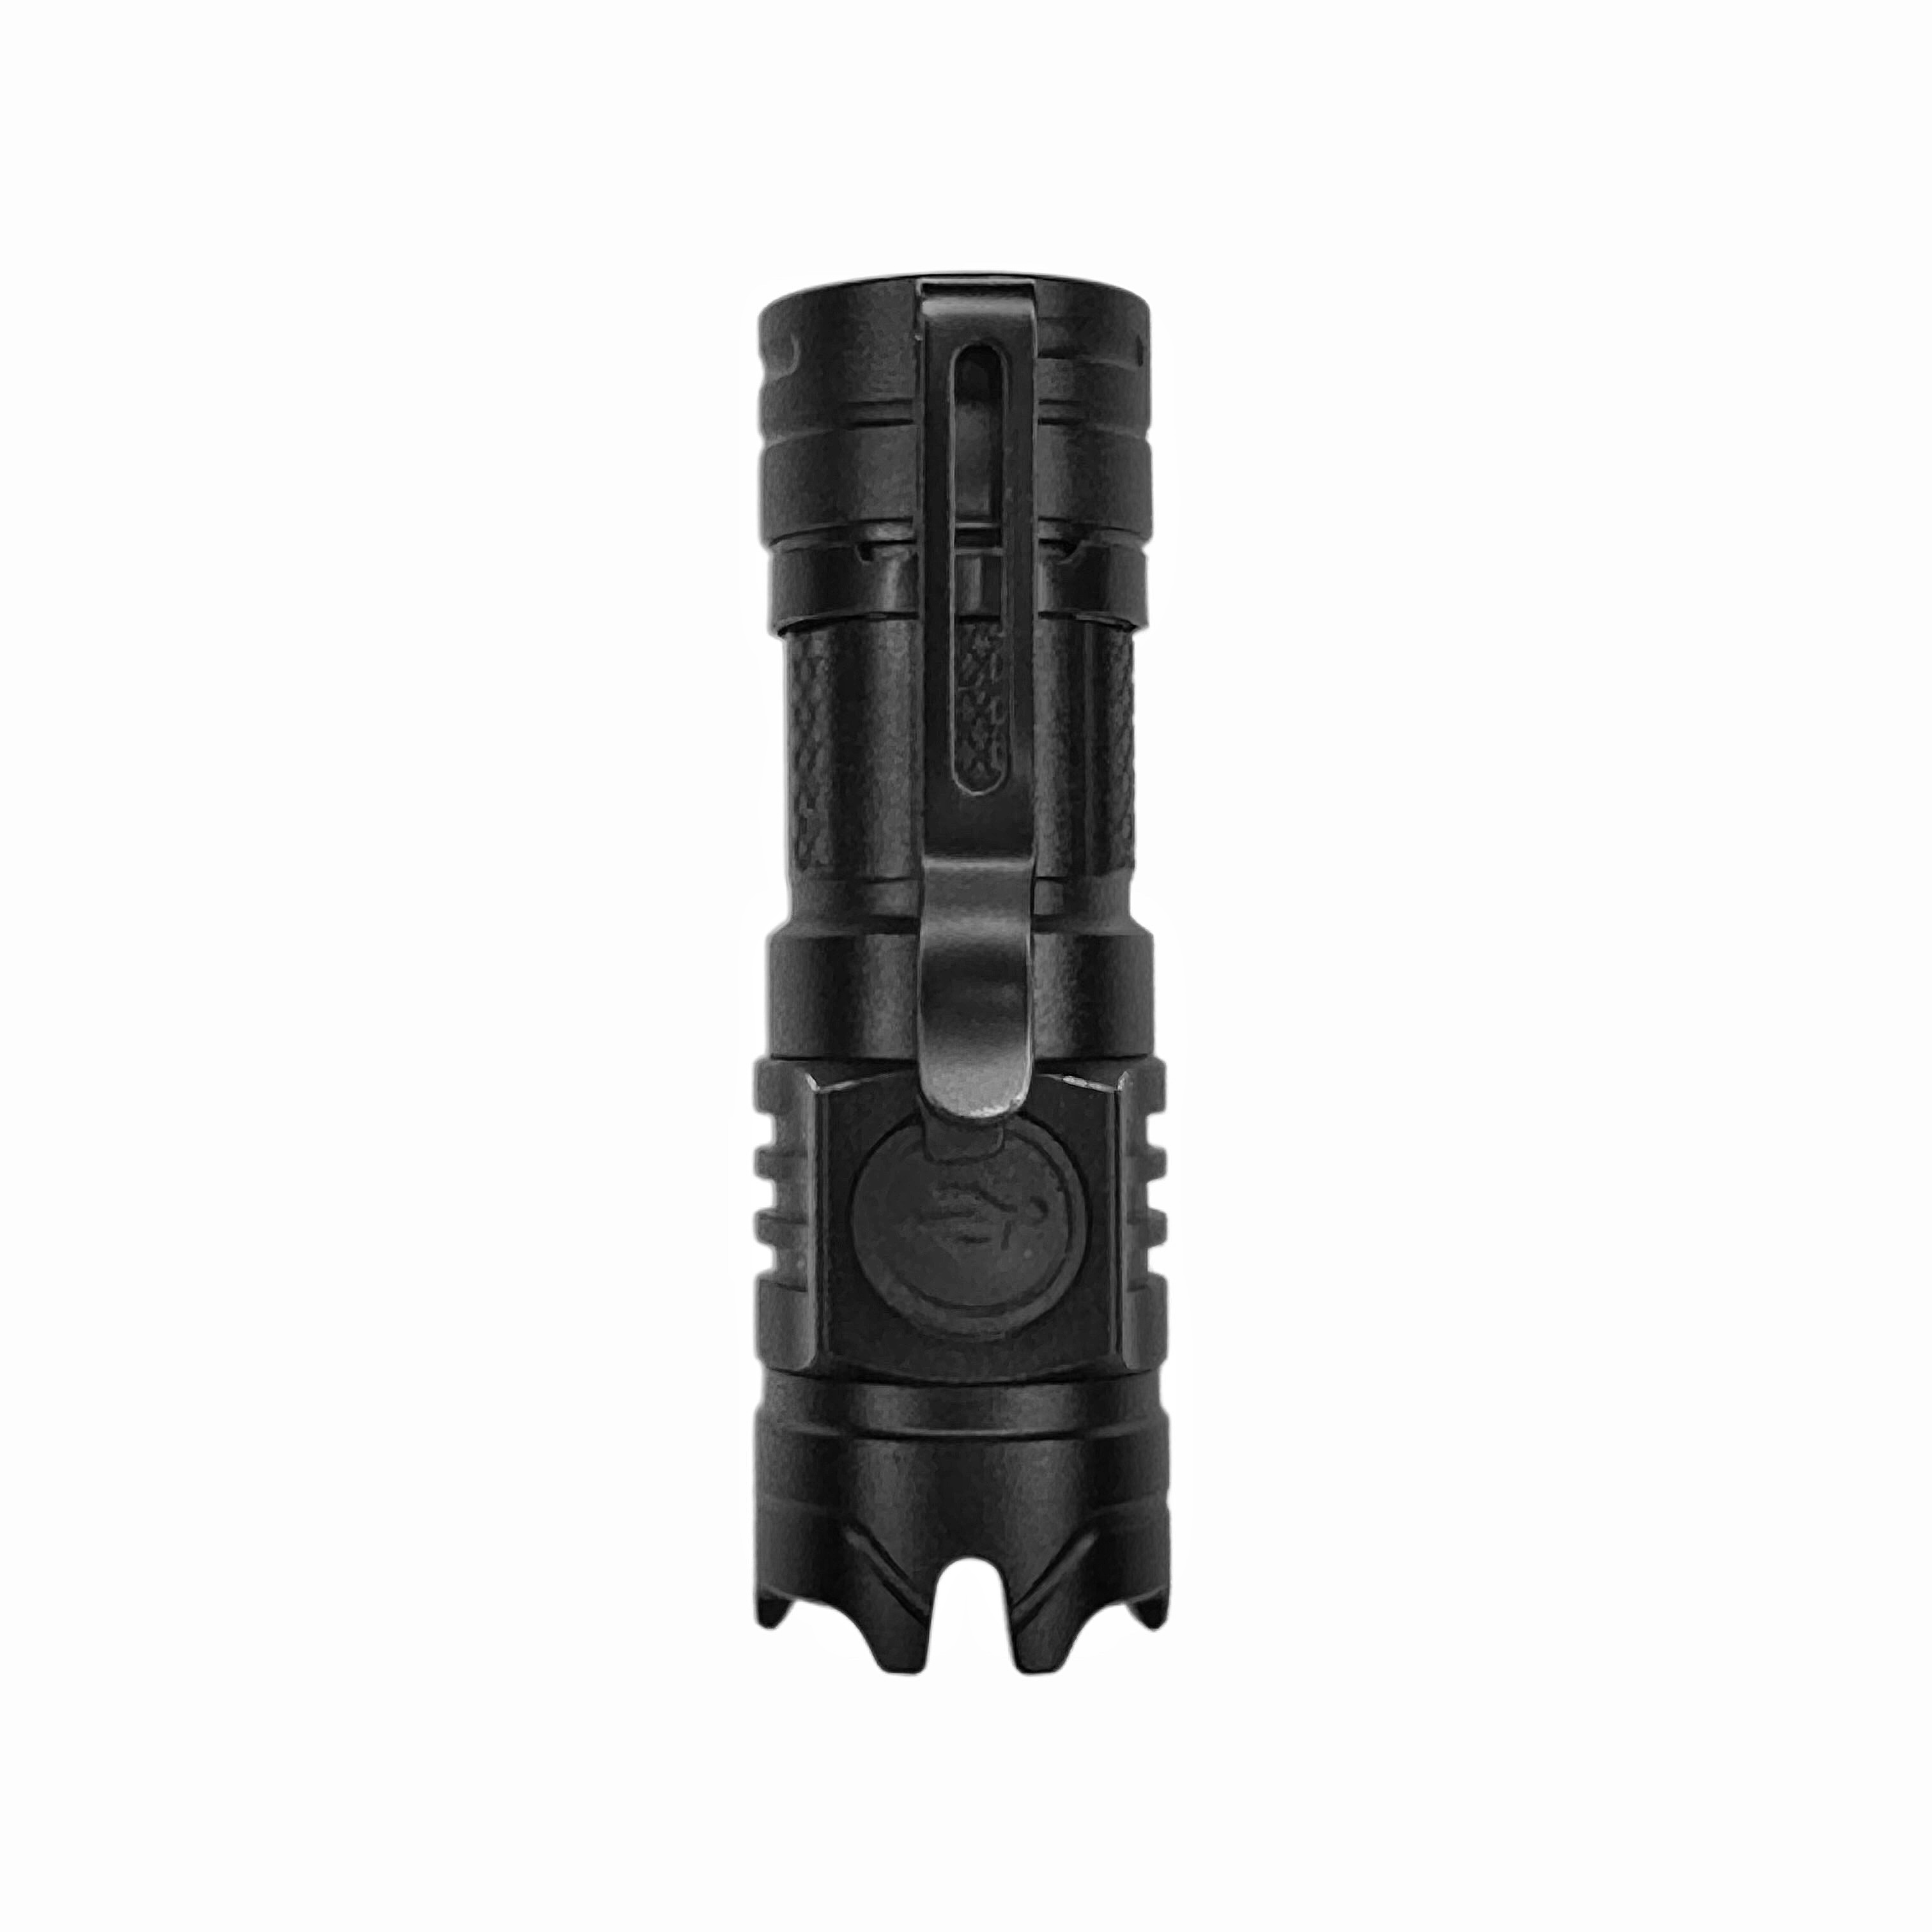 Extreme - 16340 Lithium Micro Tactical Flashlight